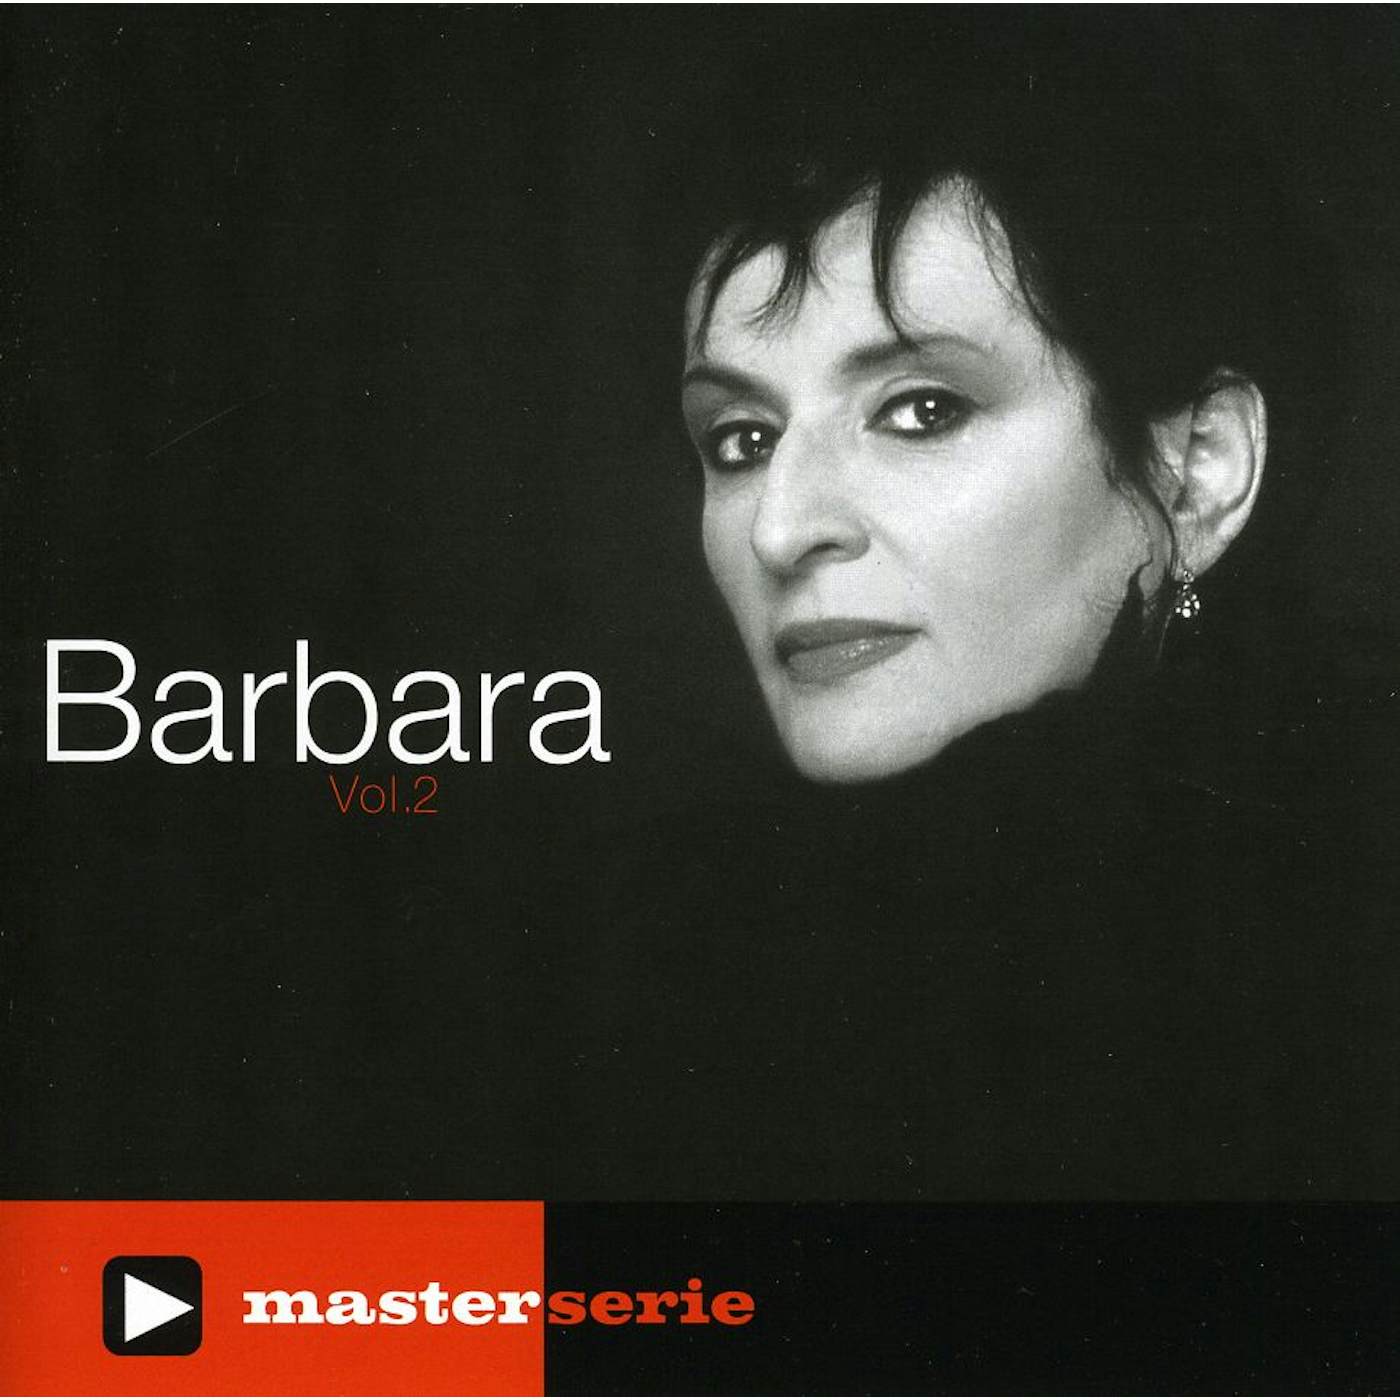 Barbara MASTER SERIE 2 CD